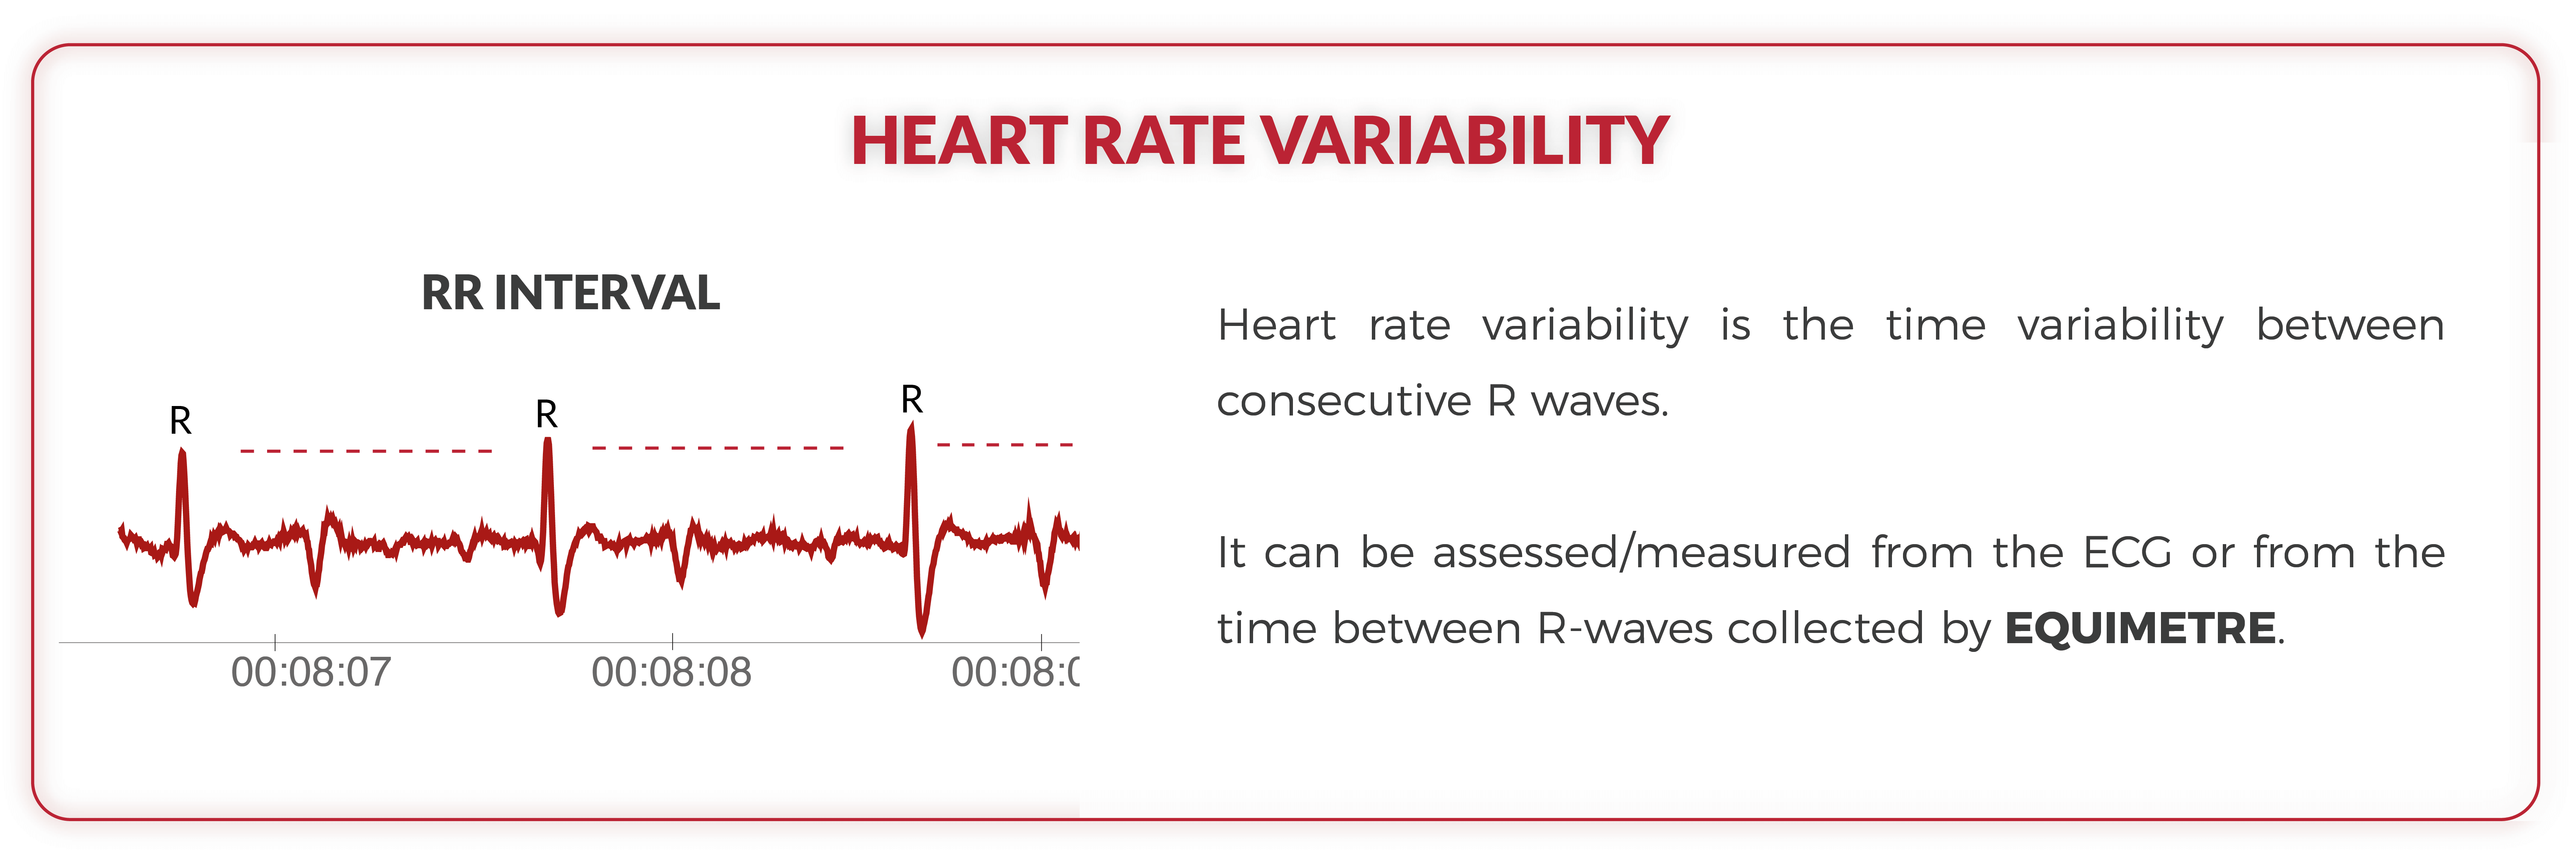 HRV variability infography